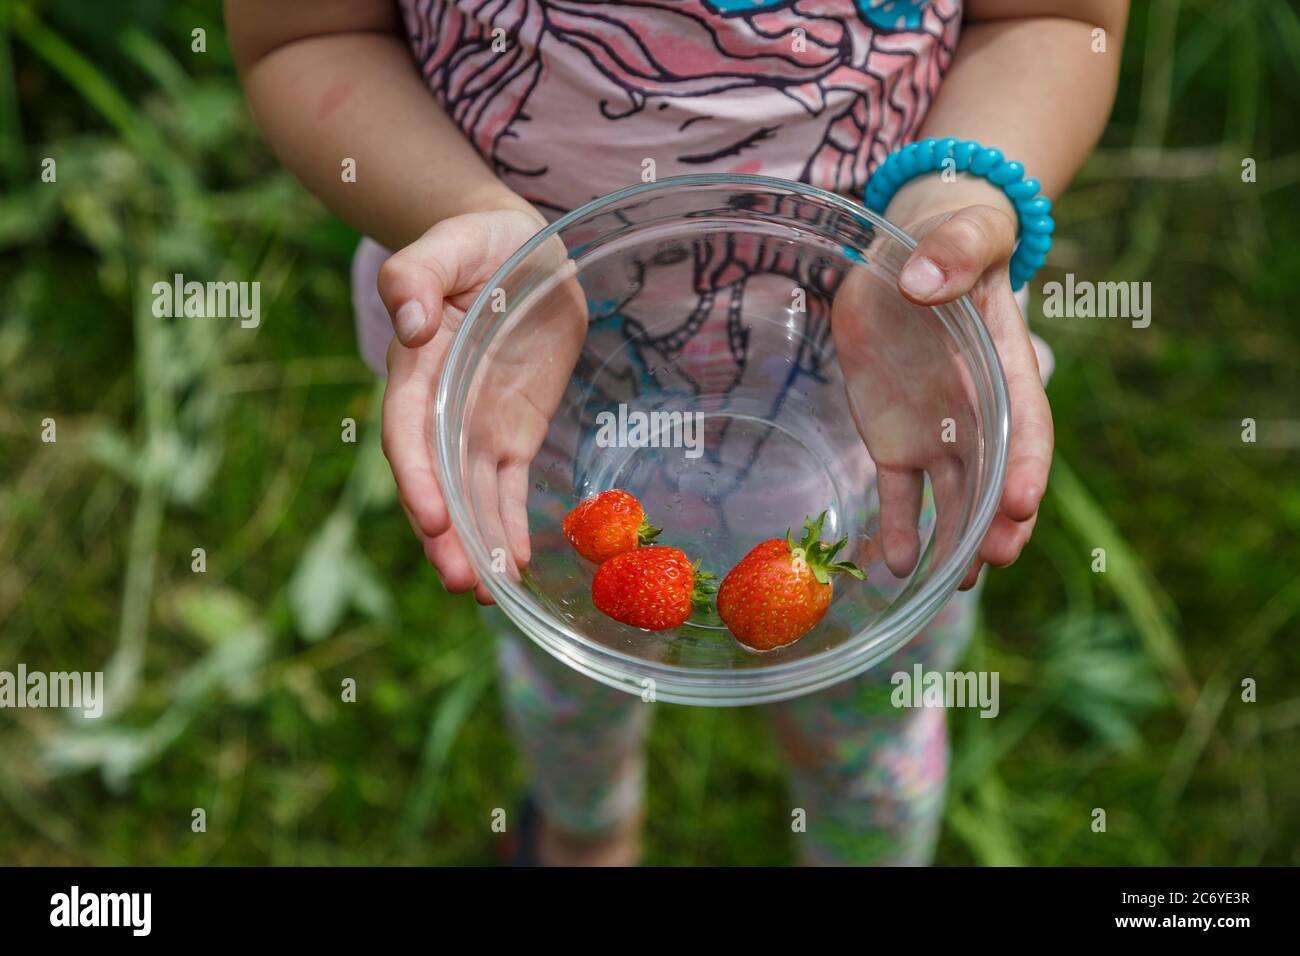 Young Girl Holding Teller mit Erdbeeren auf Grrenery Stockfoto